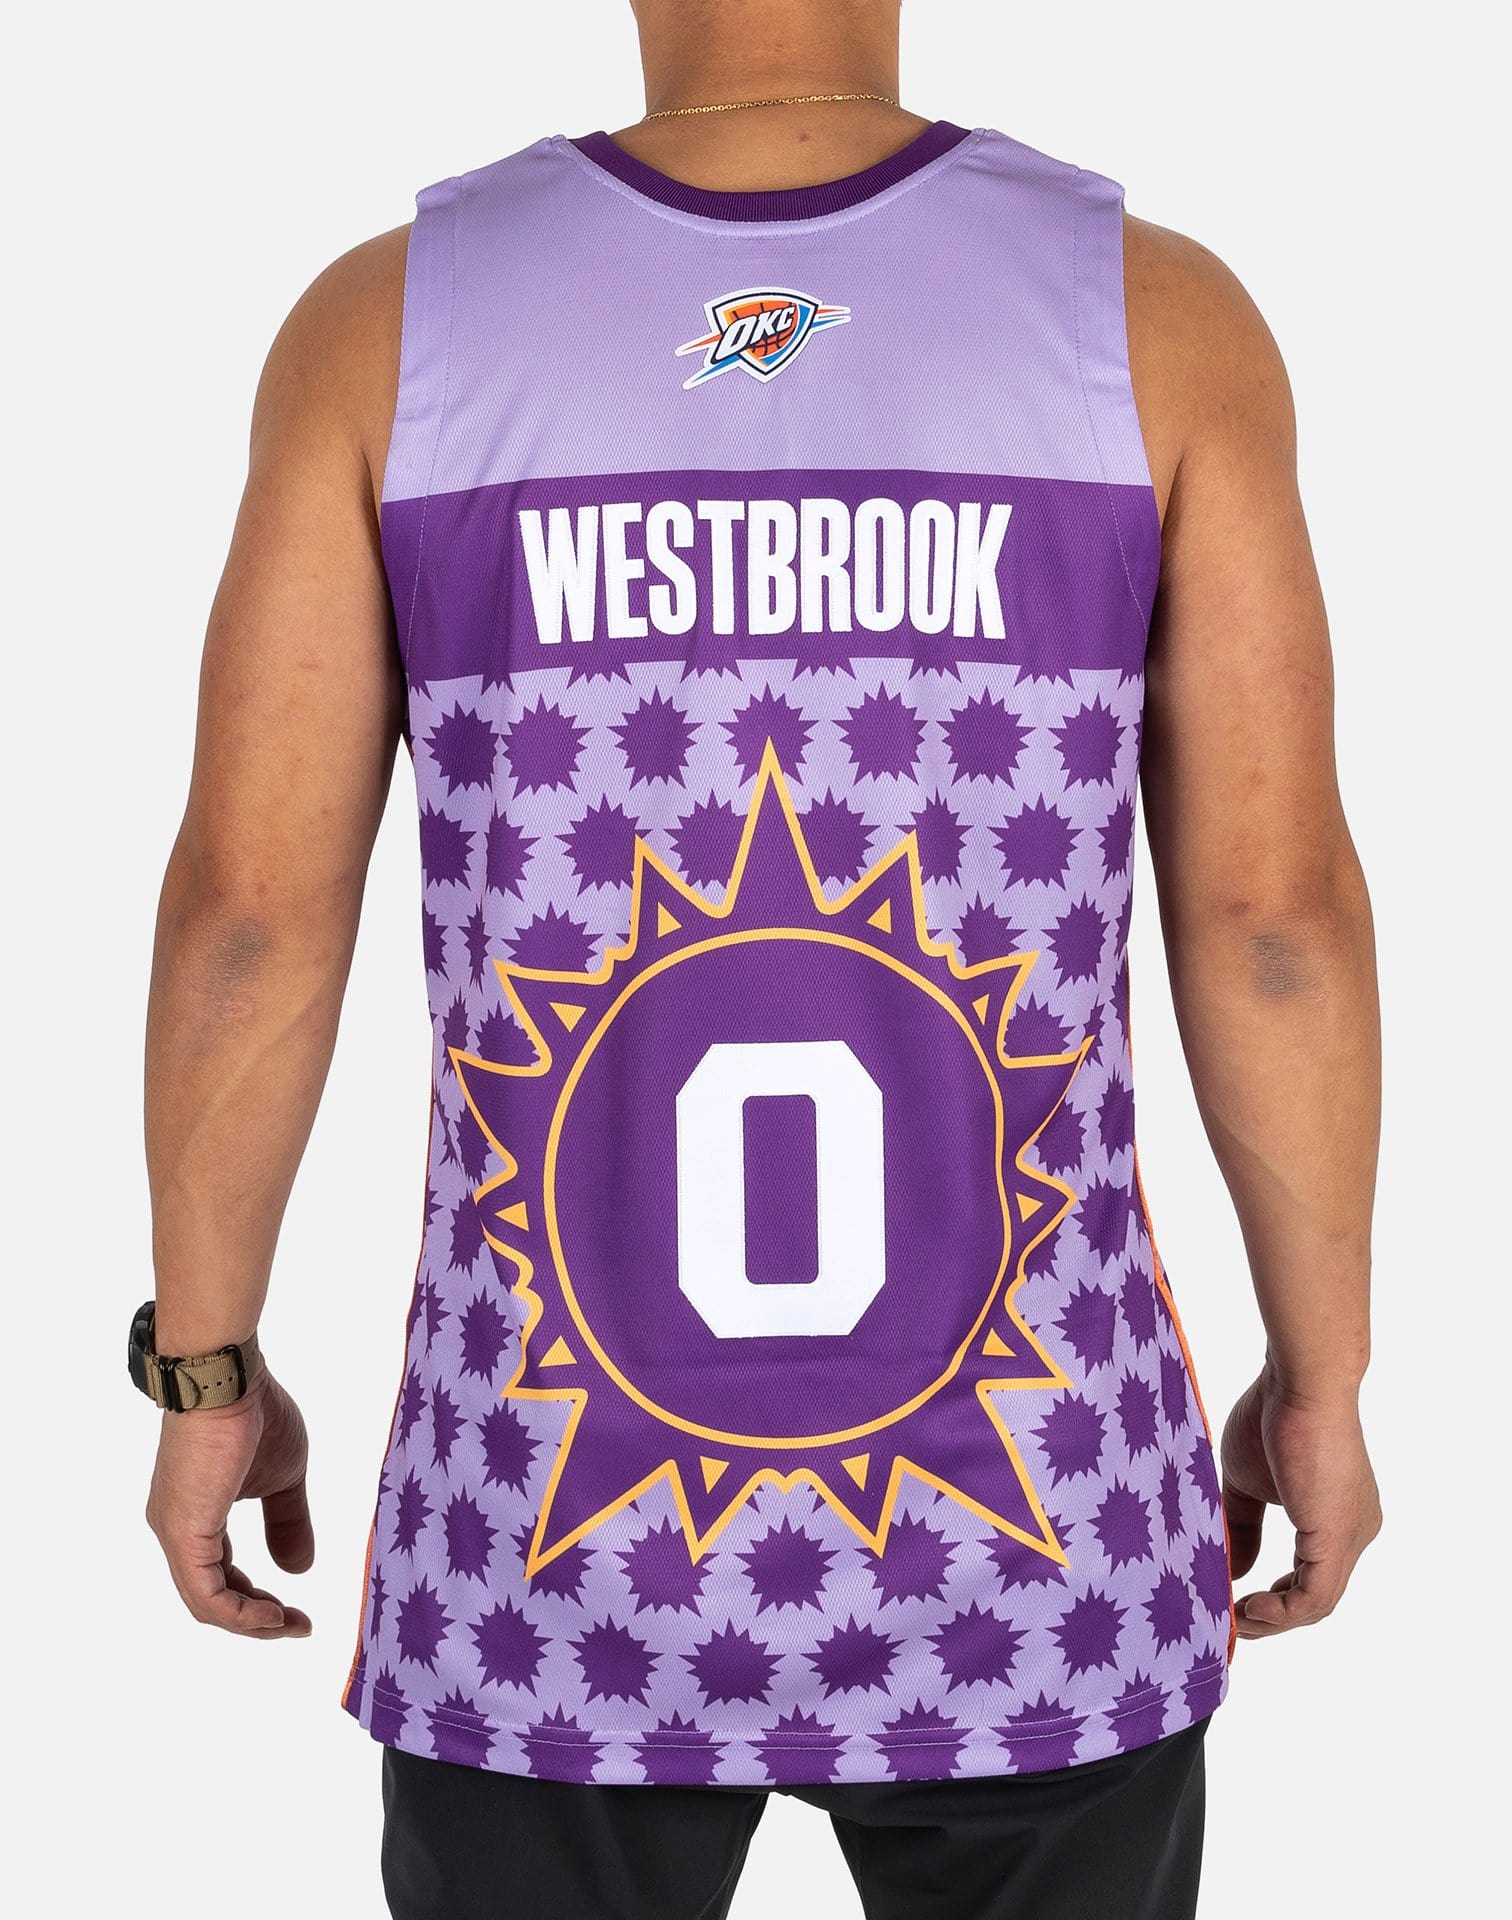 westbrook purple jersey